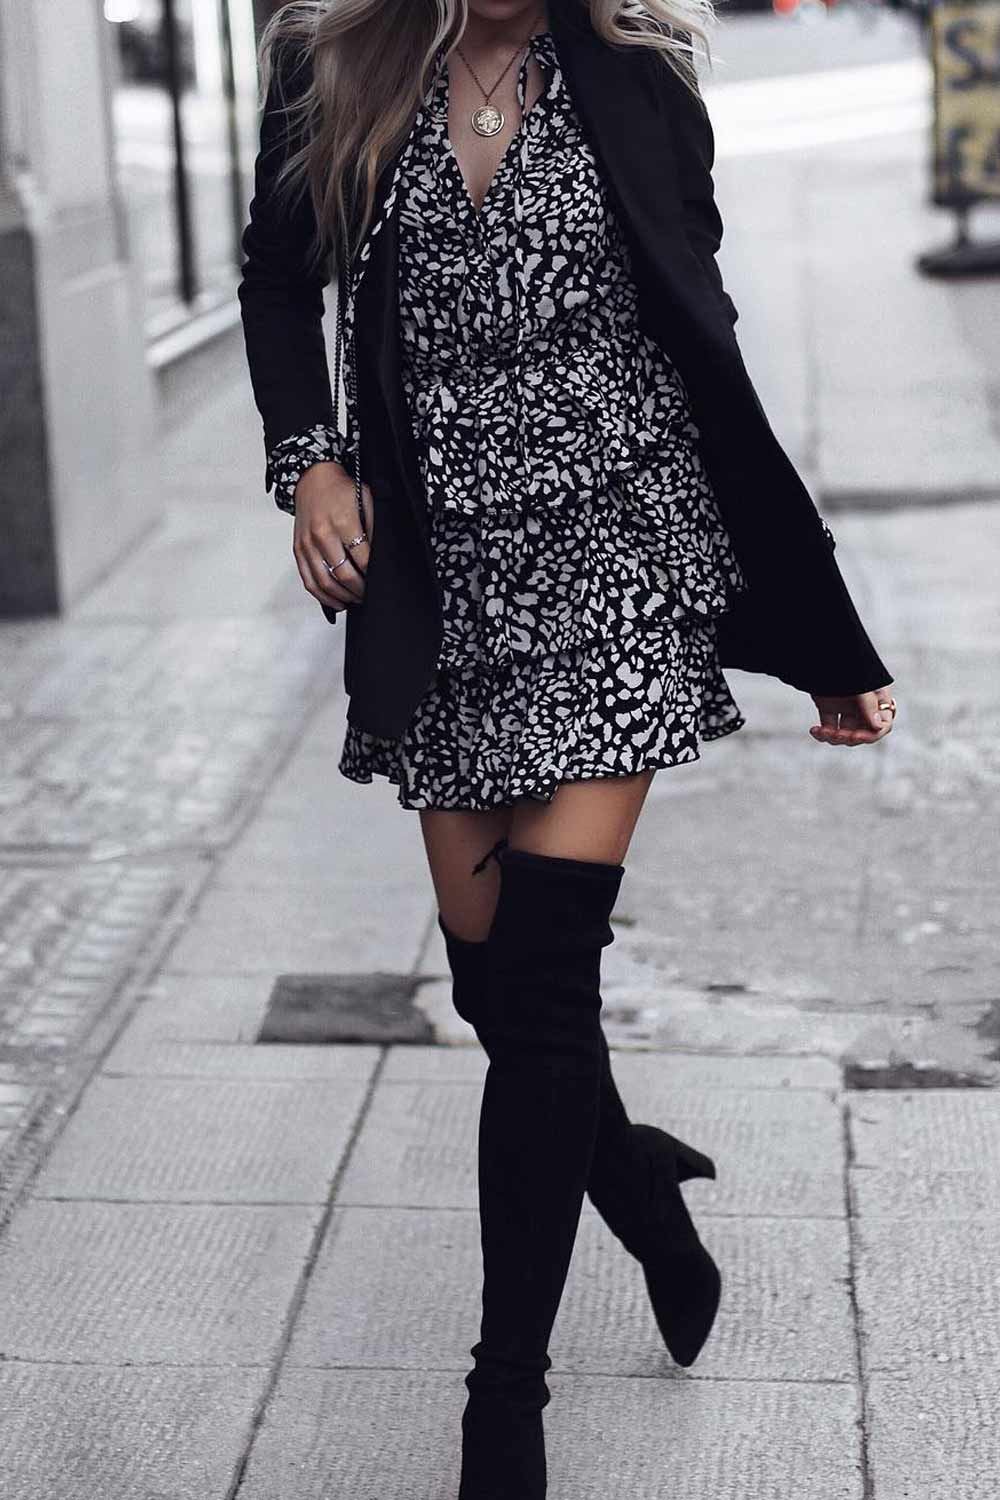 Black OTK Boots with Ruffled Dress and Blazer